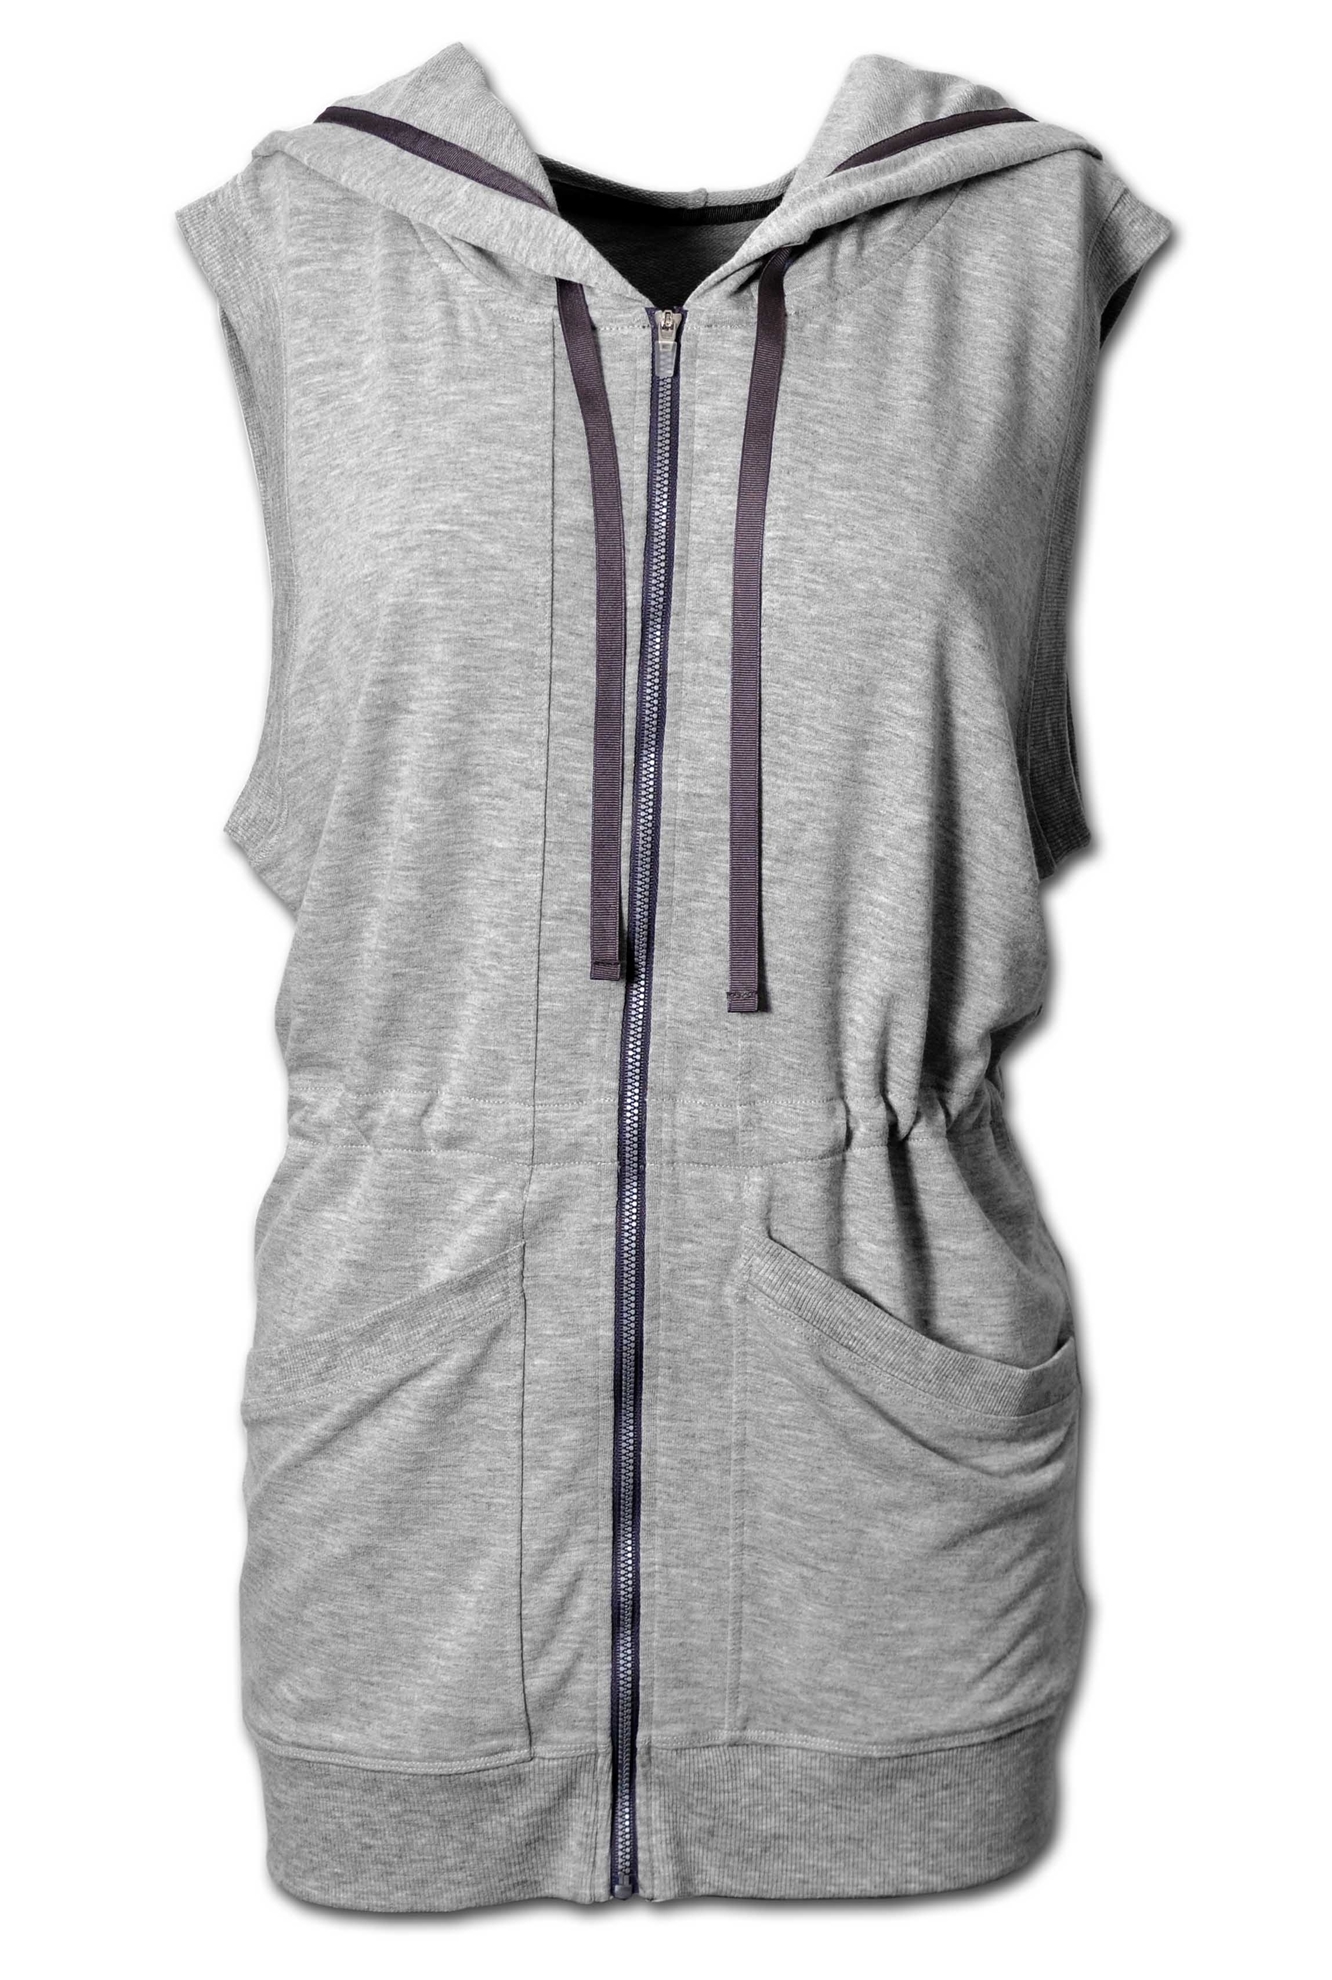 BAW Athletic Wear T21 - Ladies Tunic Vest